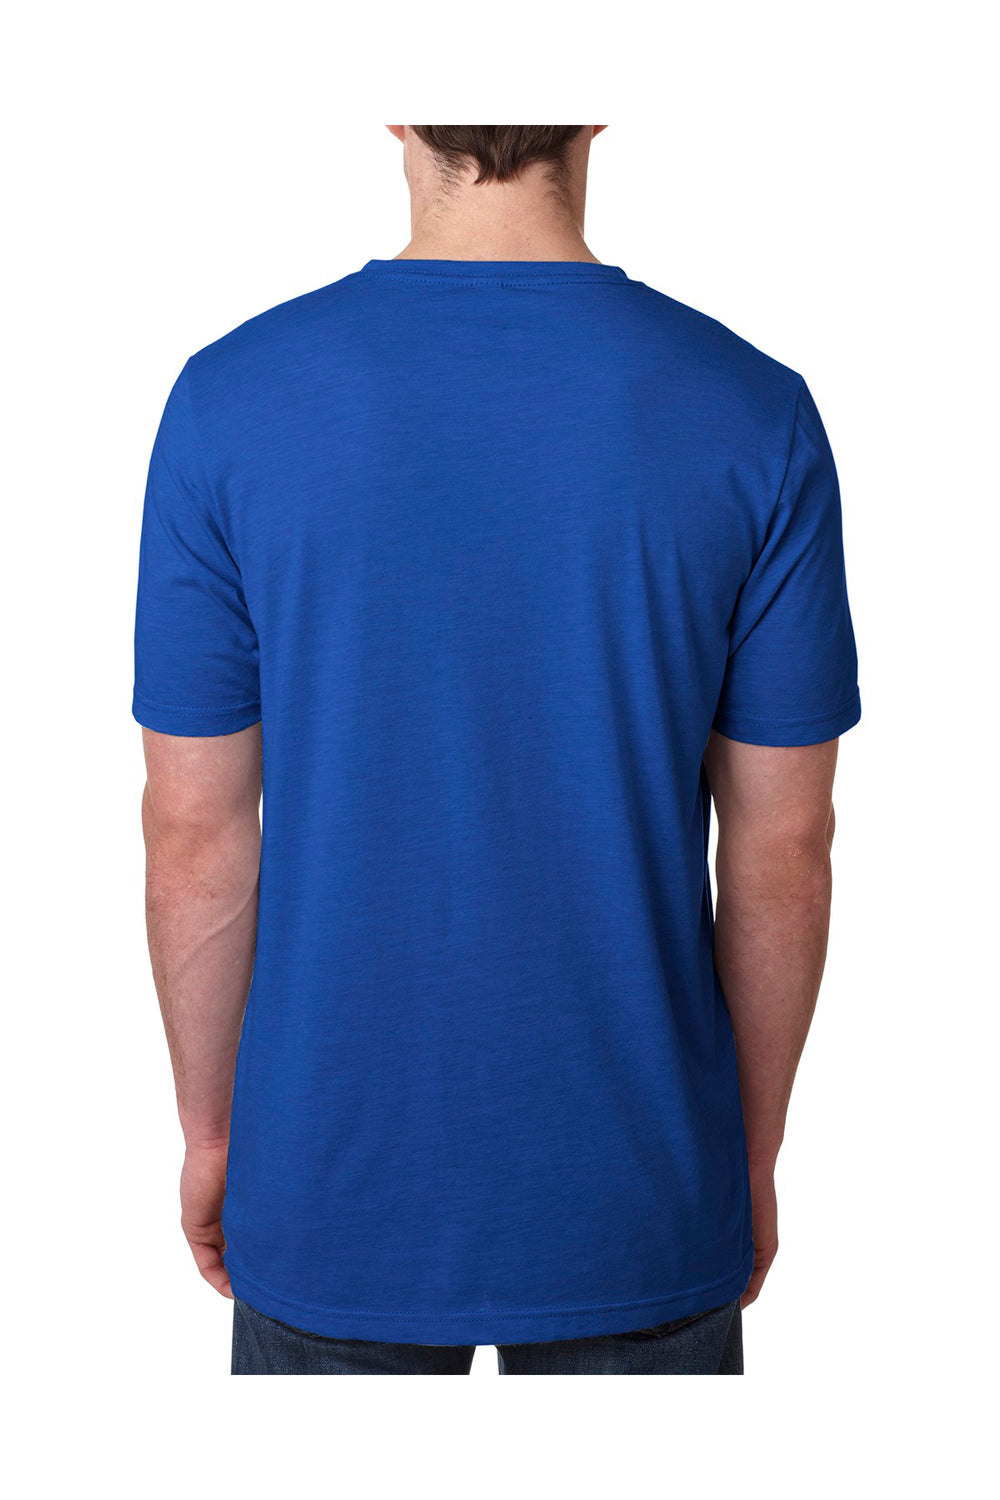 Next Level 6200 Mens Jersey Short Sleeve Crewneck T-Shirt Royal Blue Back